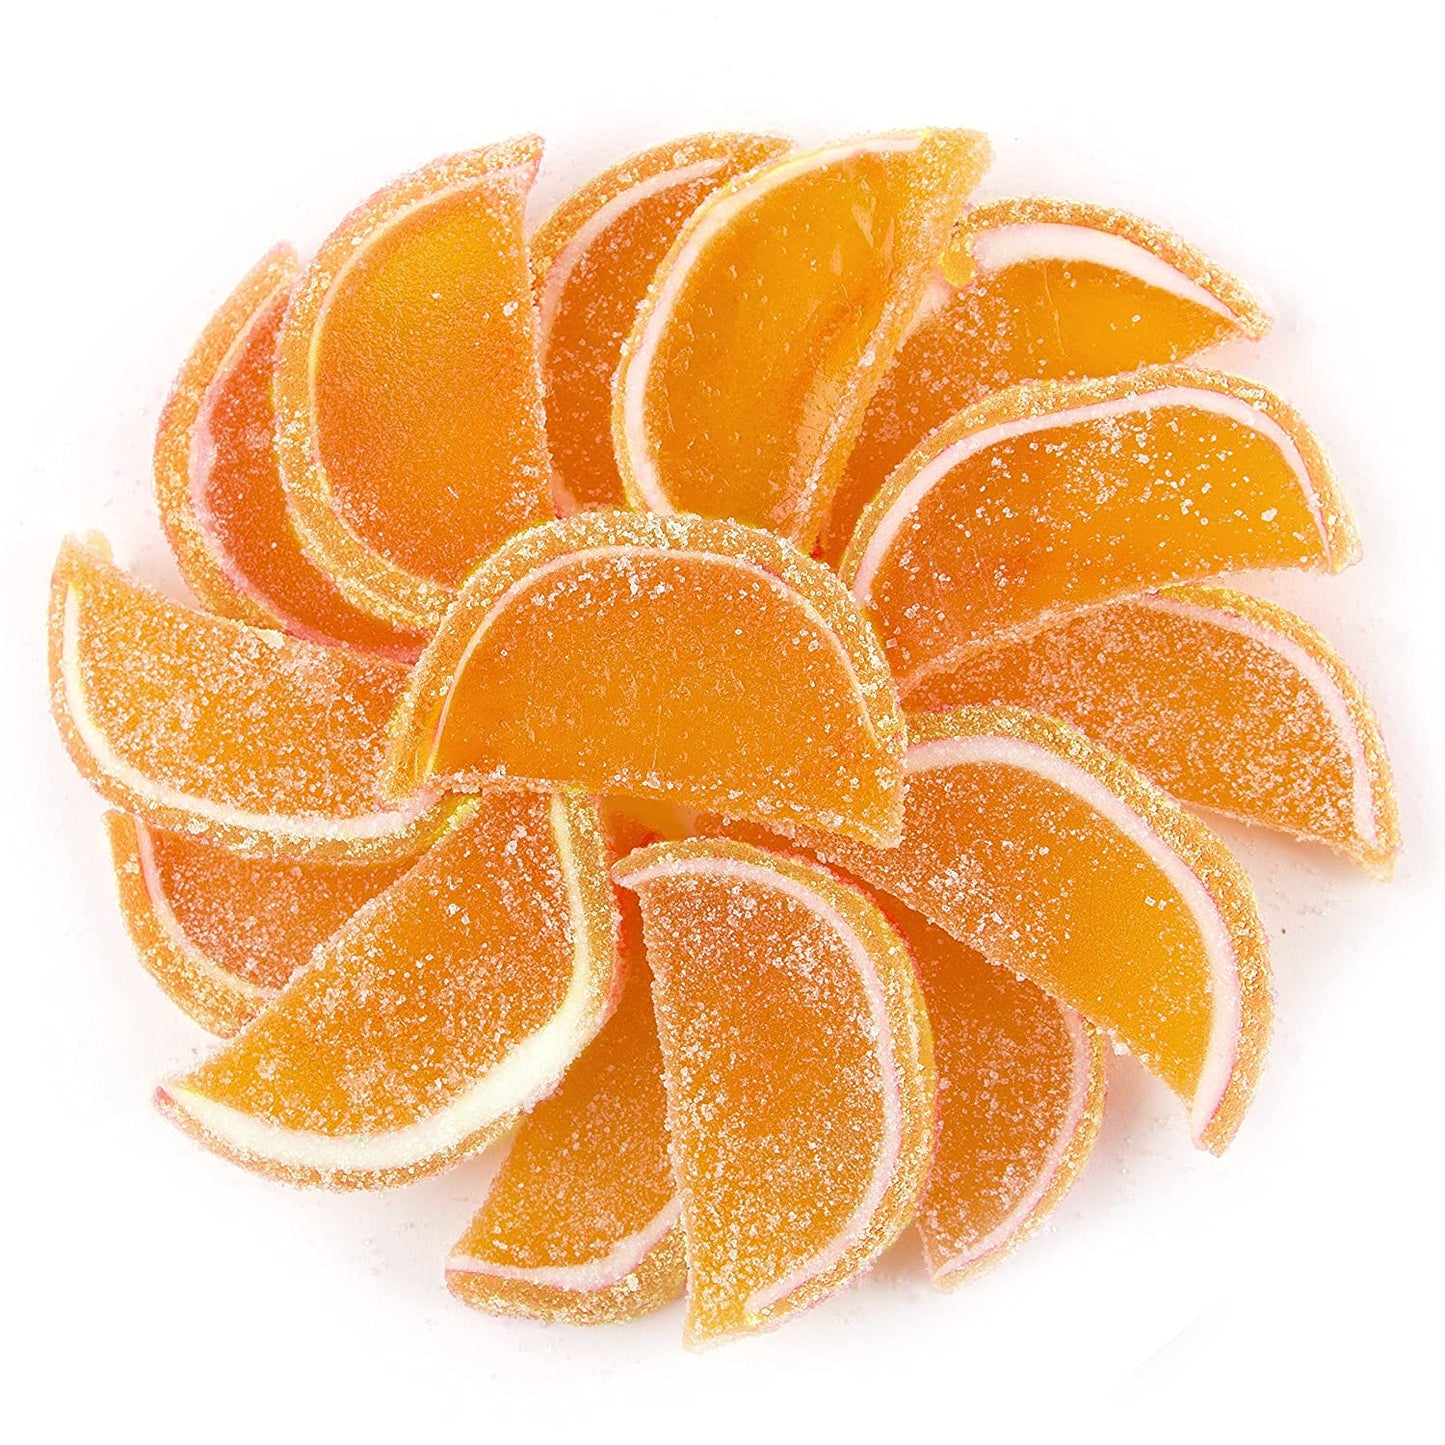 Orange Fruit Slices 5 pc